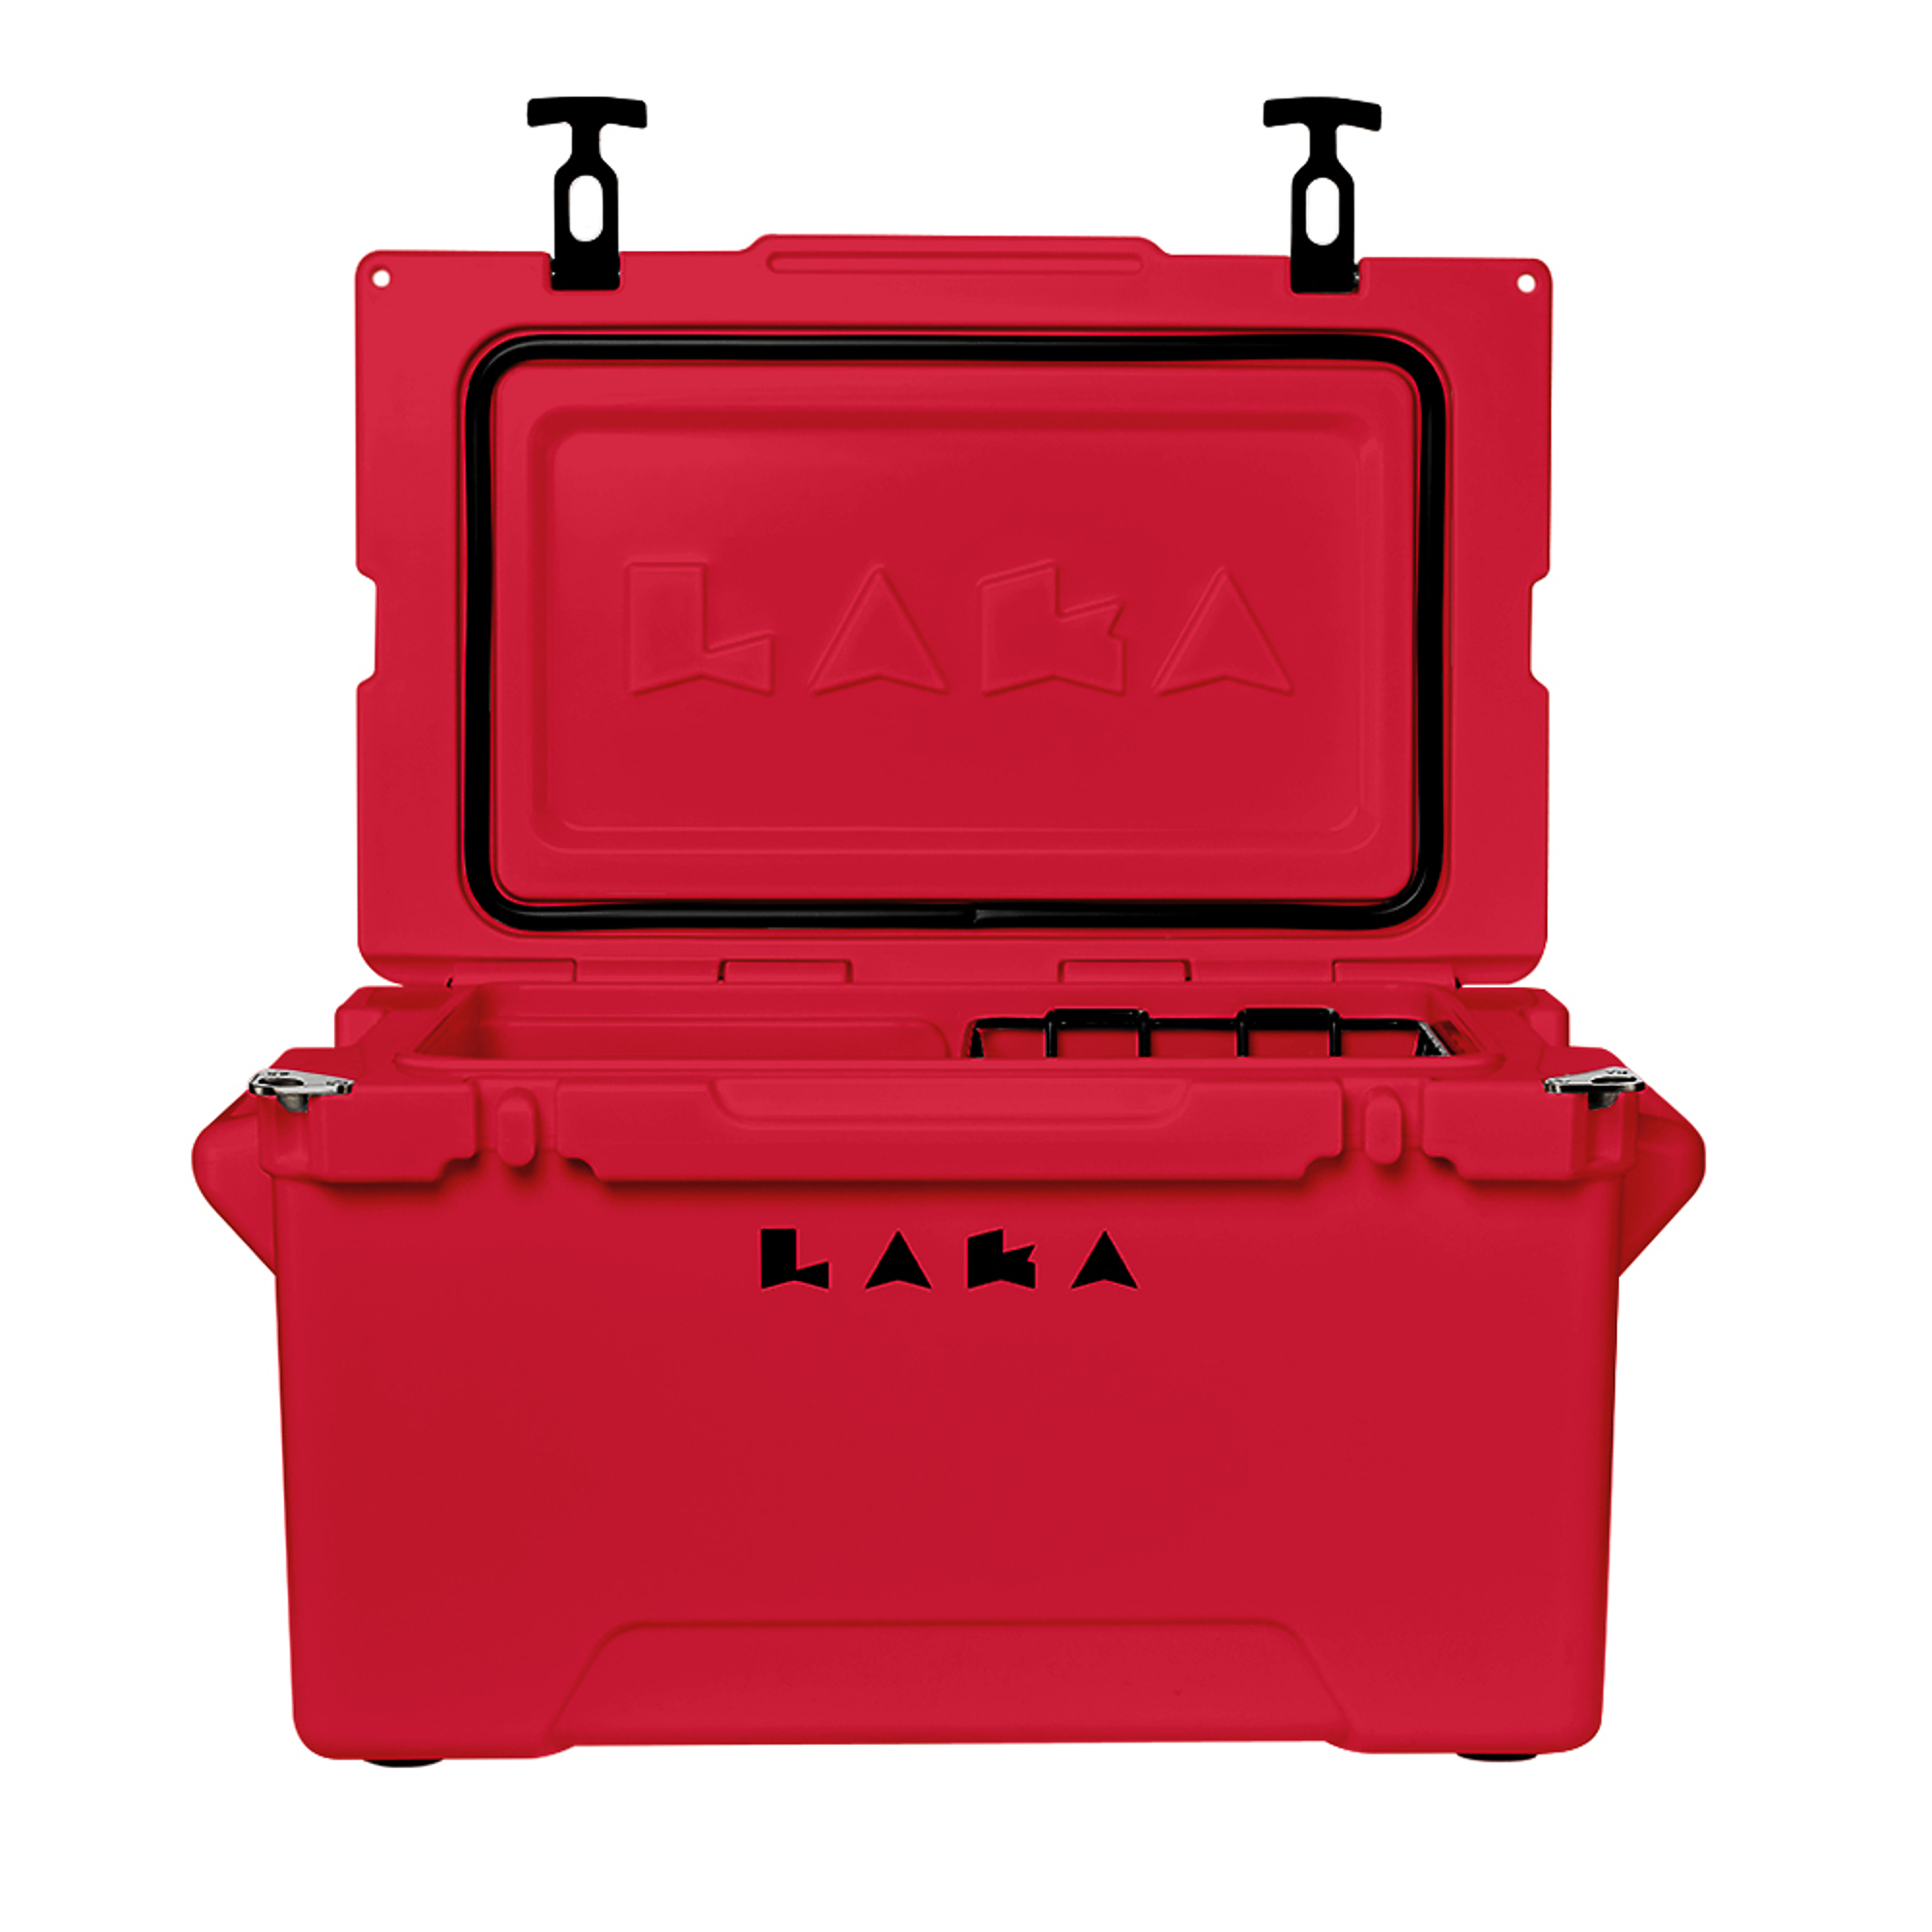 LAKA Cooler, 45 Quart Cooler - Red, Capacity 11.25 Gal, Model 1084